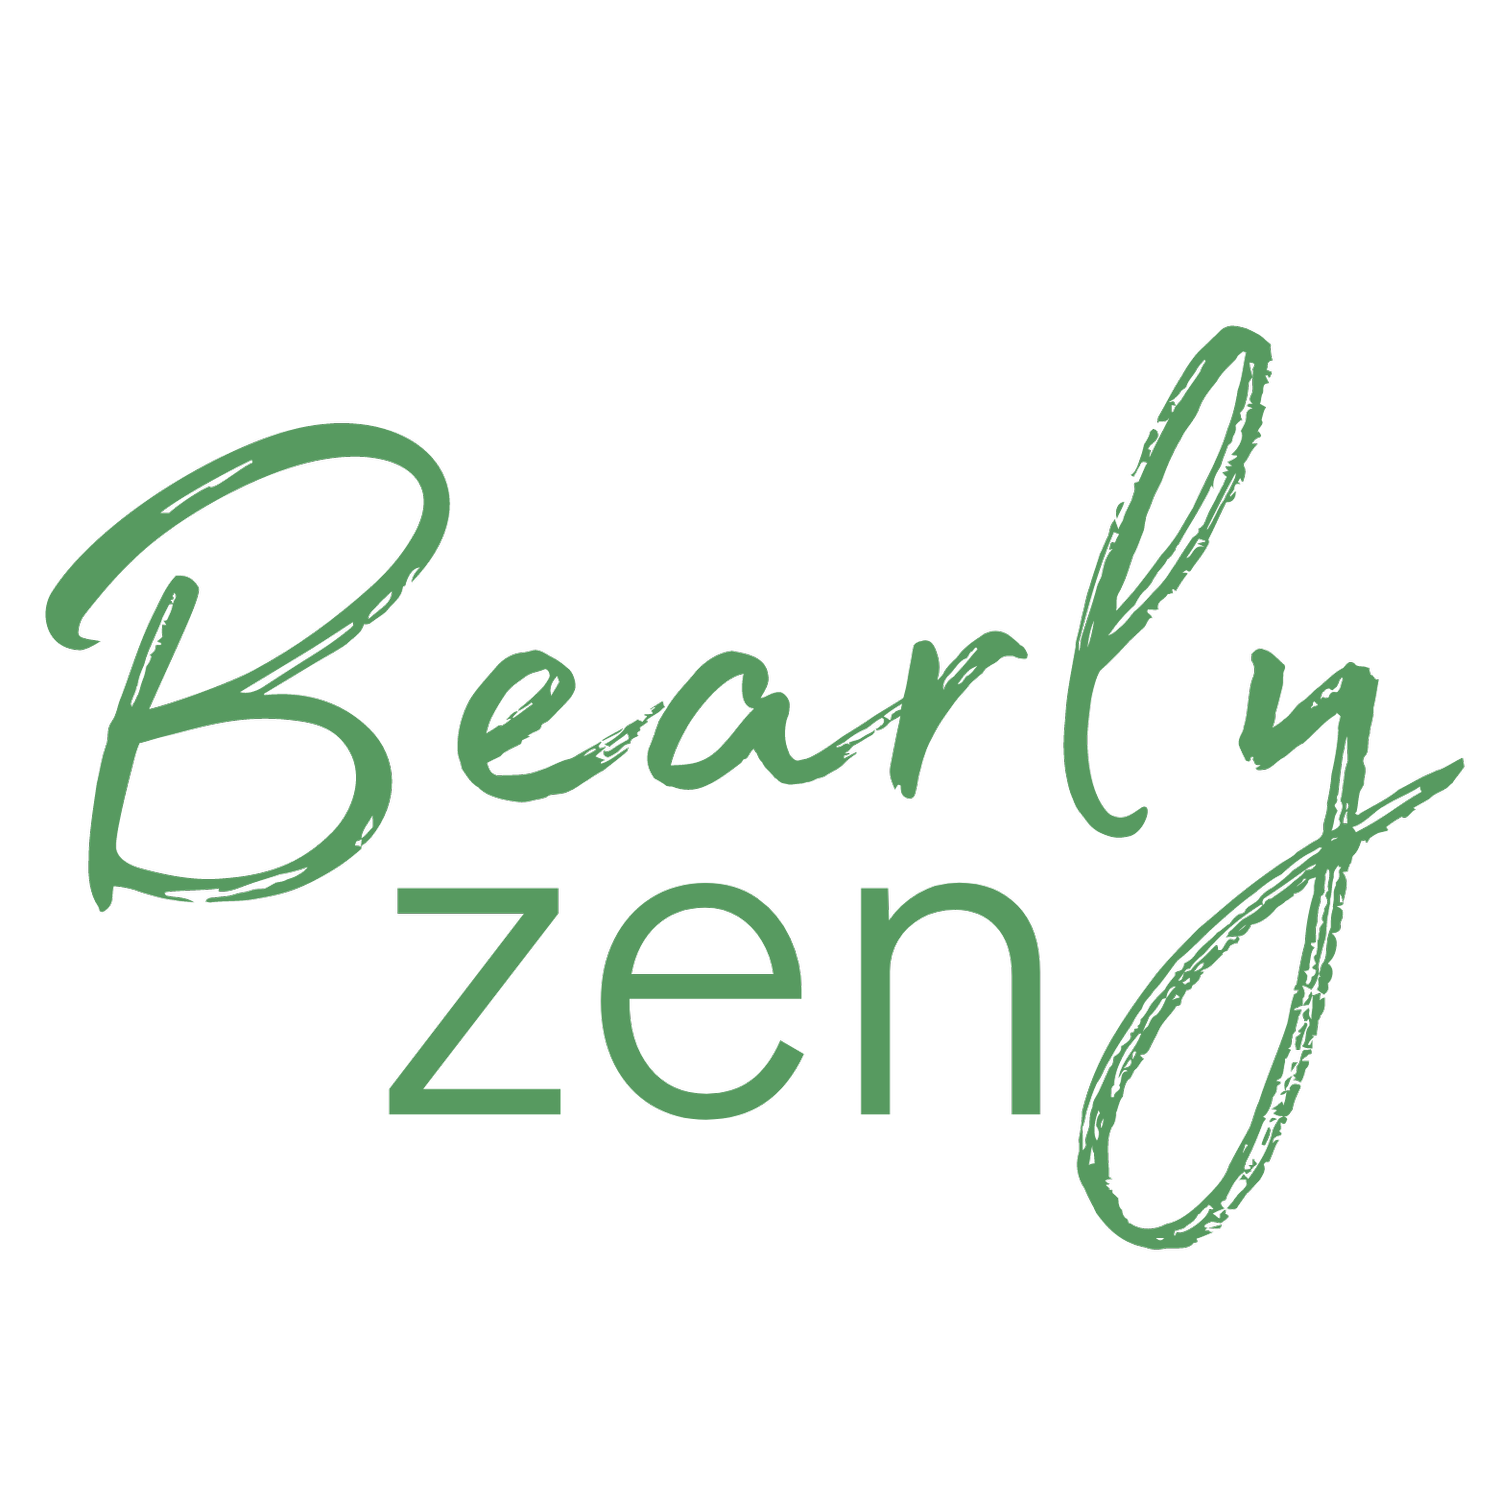 Bearly Zen